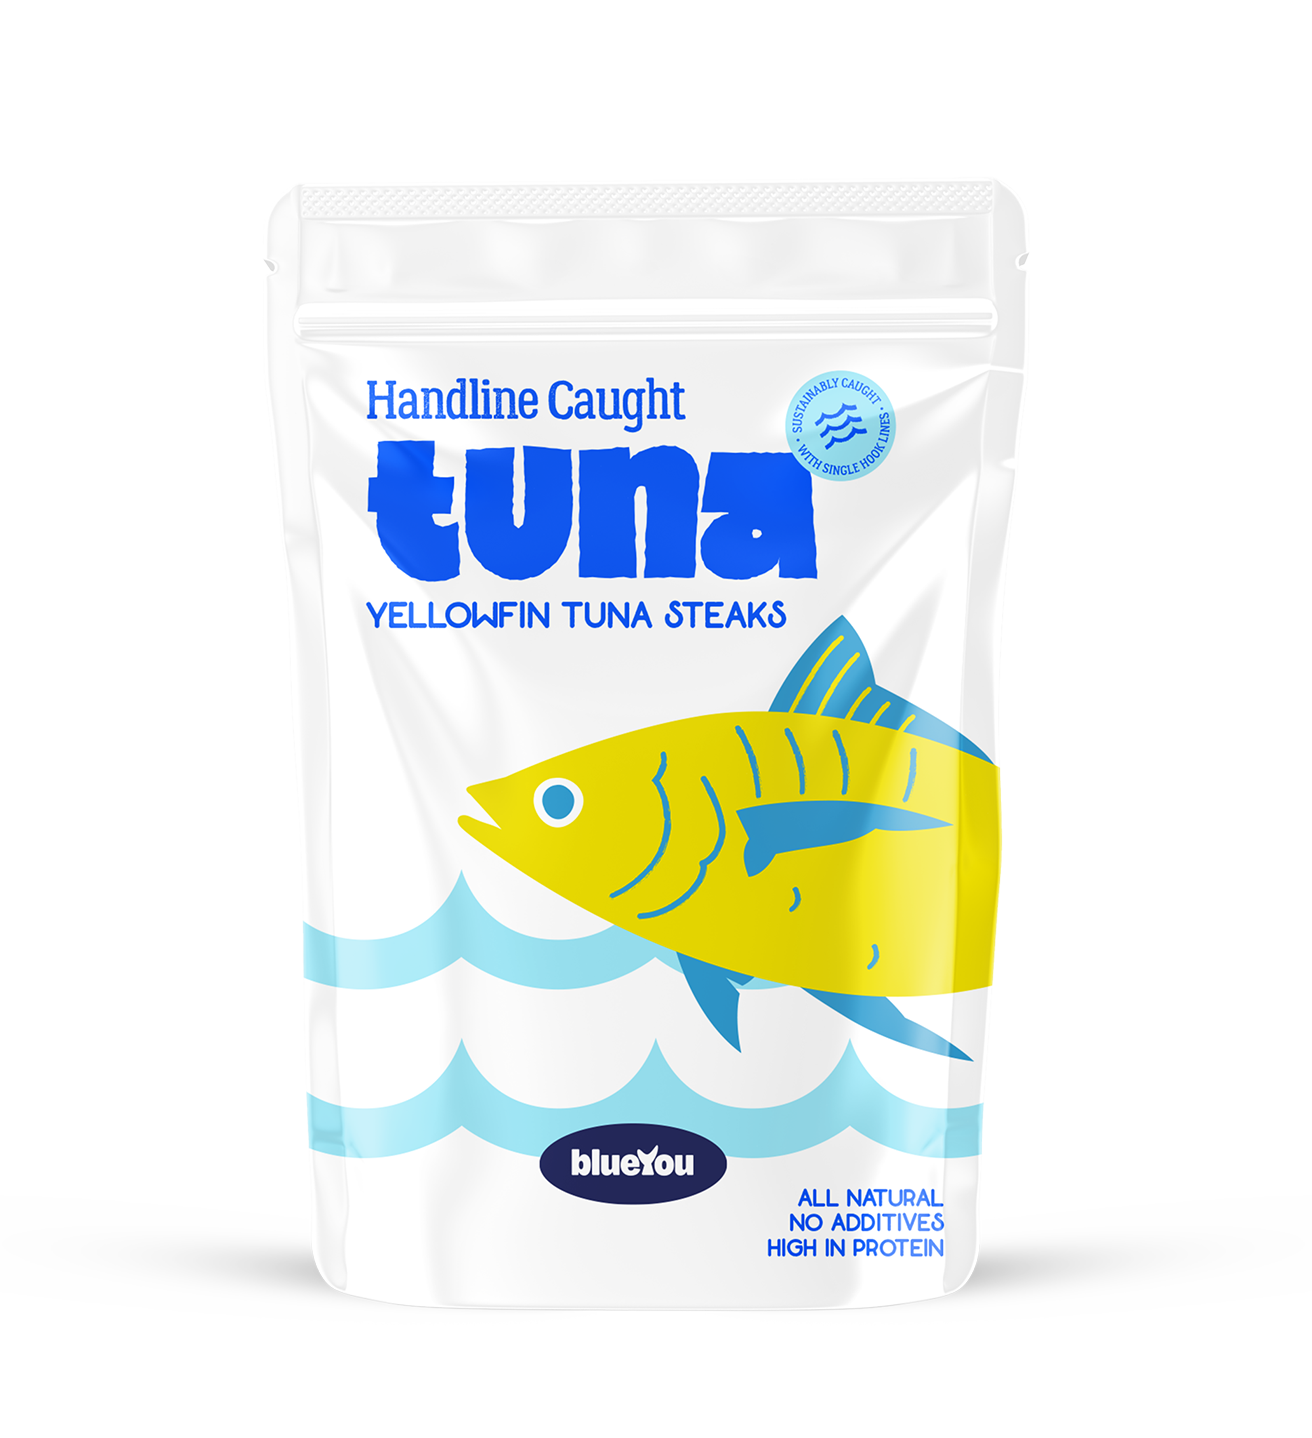 By website pics 0000s 0013 handlinecaught tuna